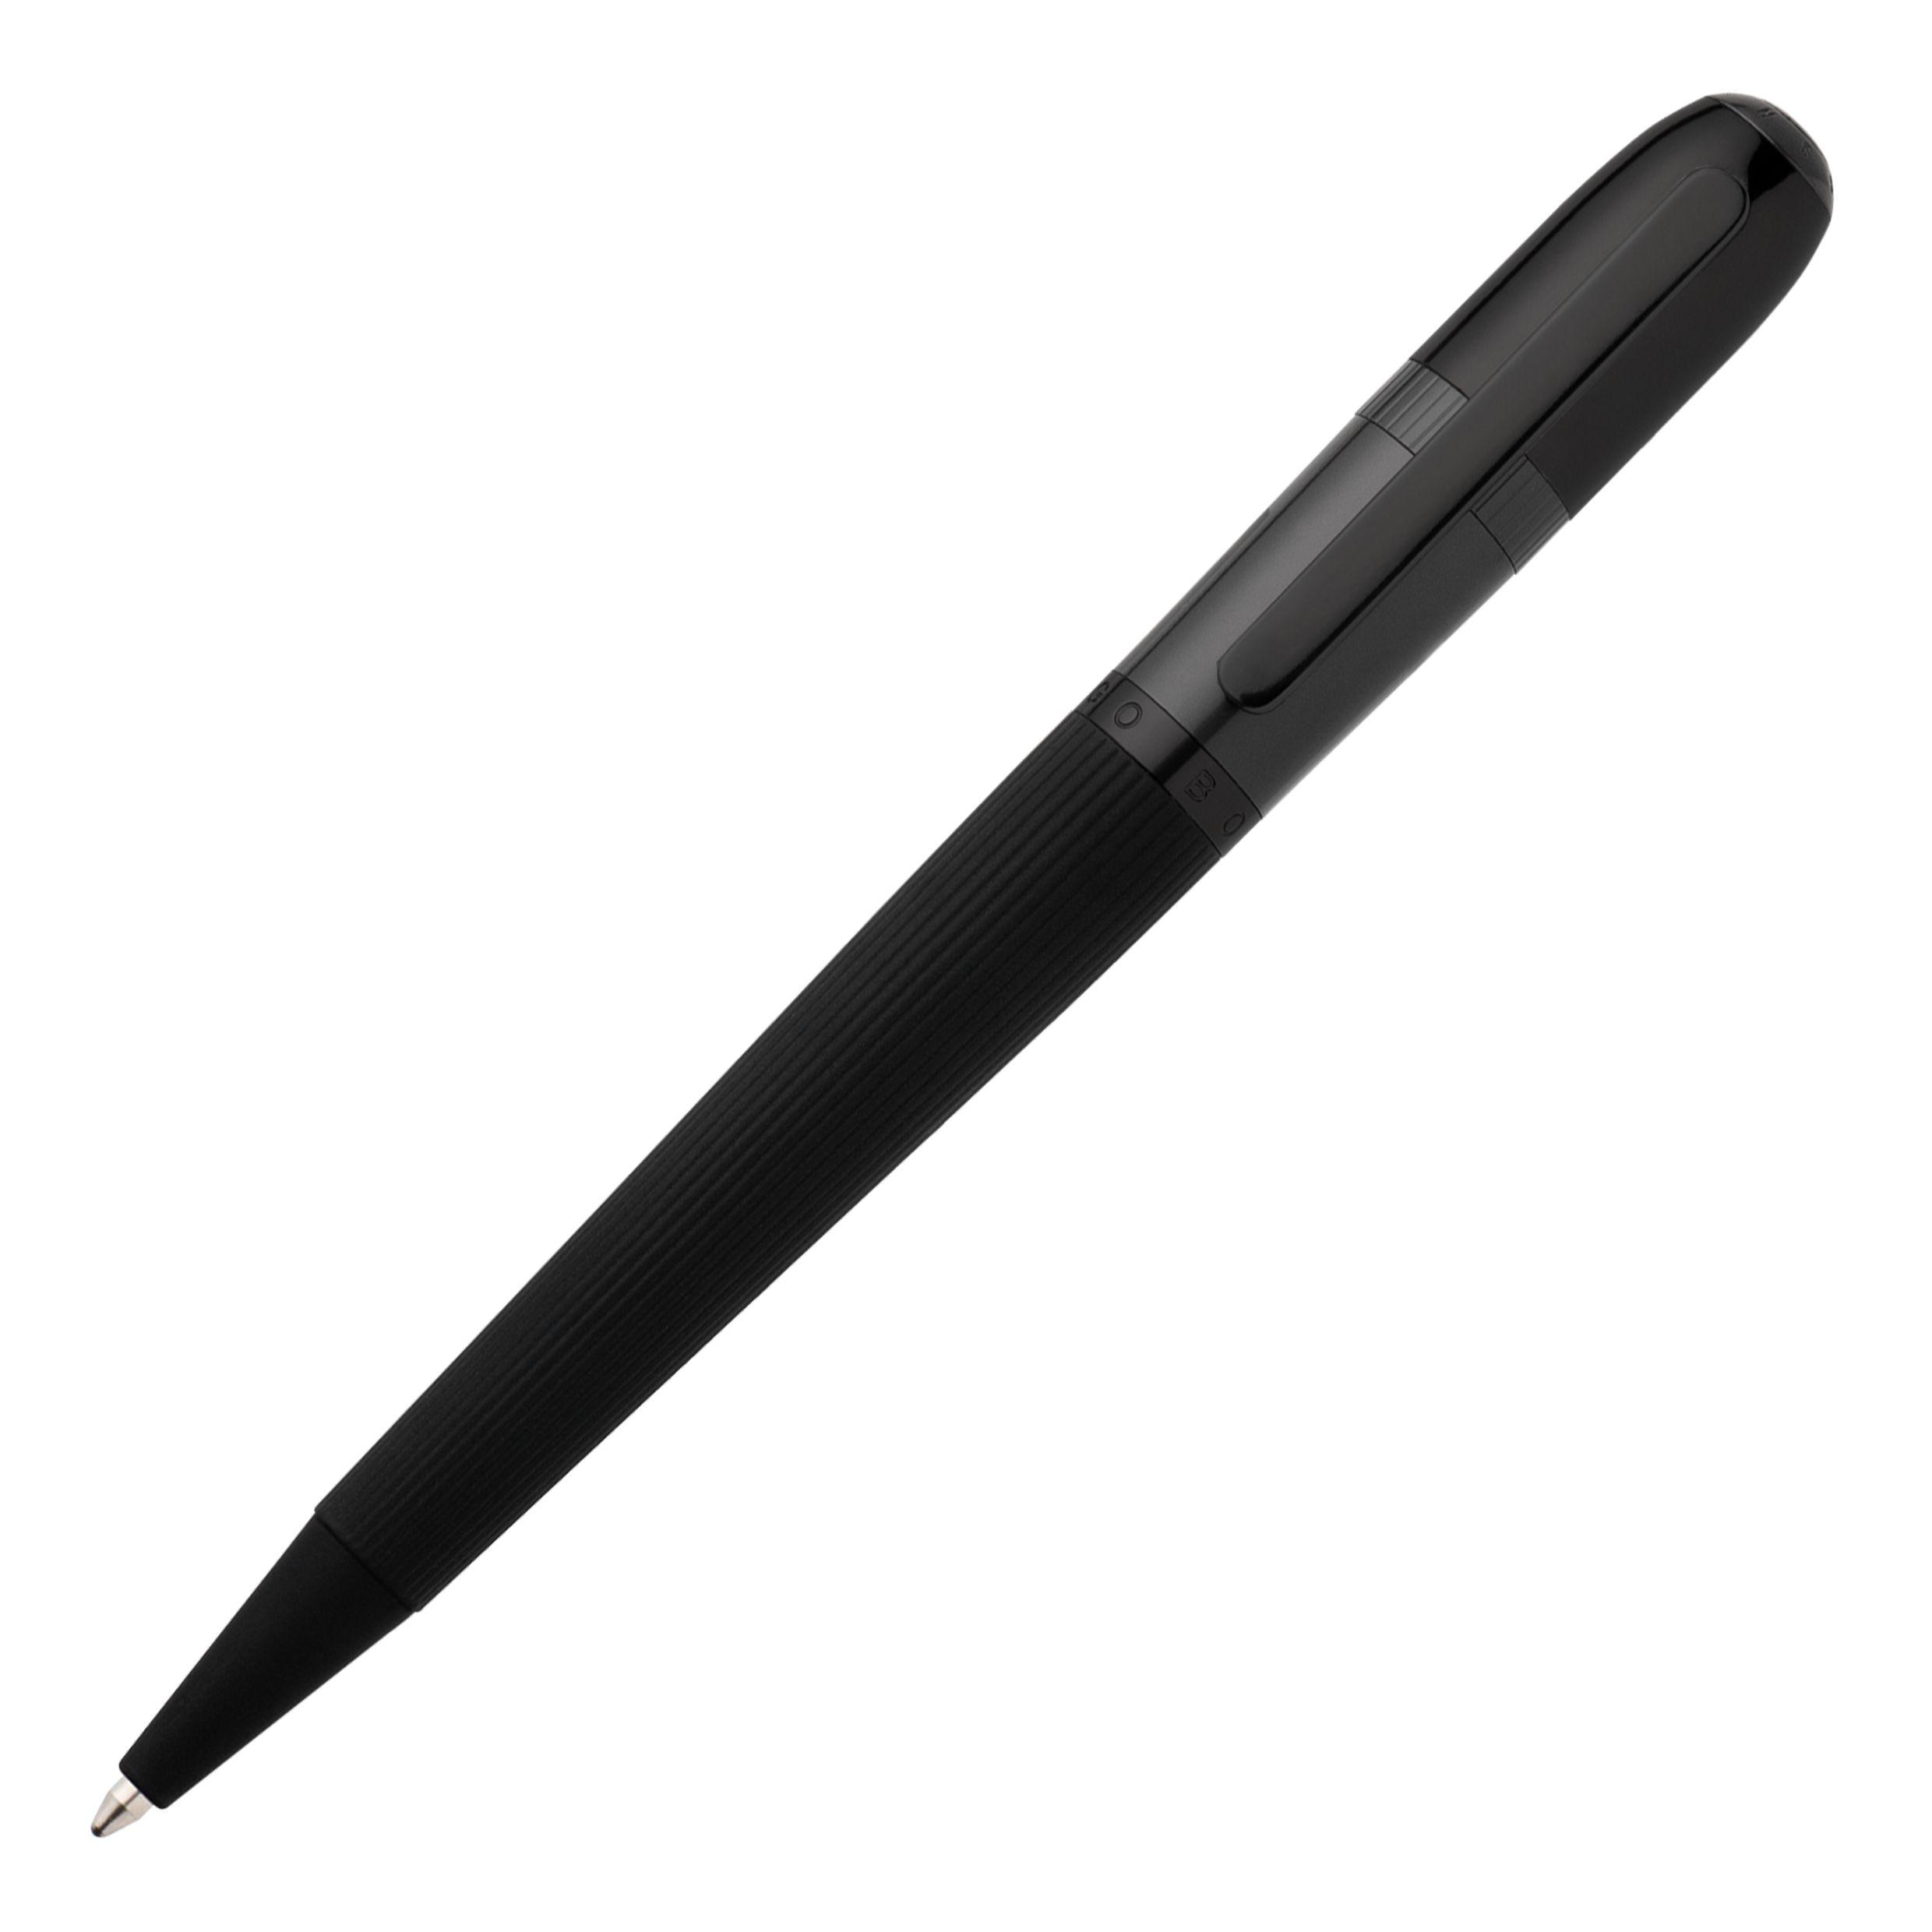 Hugo Boss pen contour black